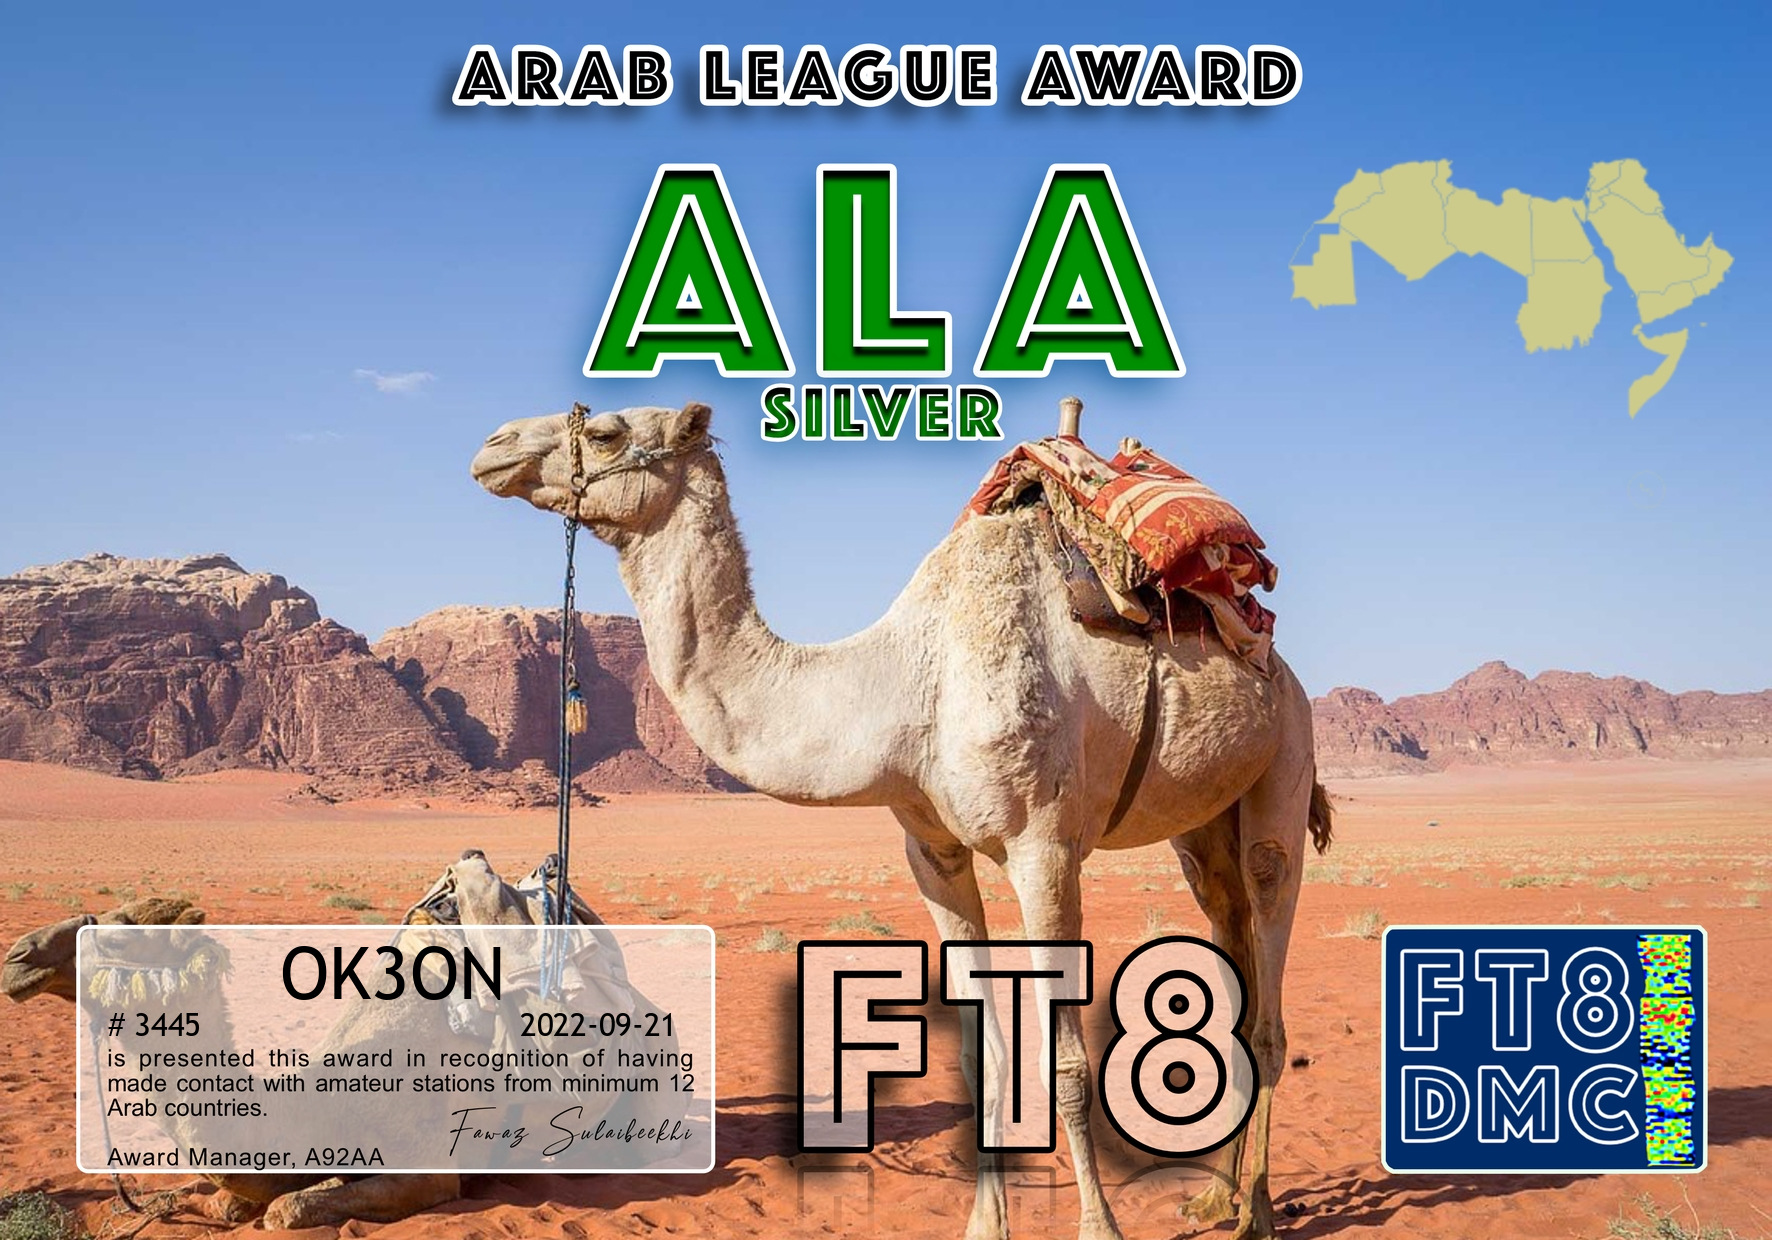 awards/OK3ON-ALA-SILVER_FT8DMC.jpg